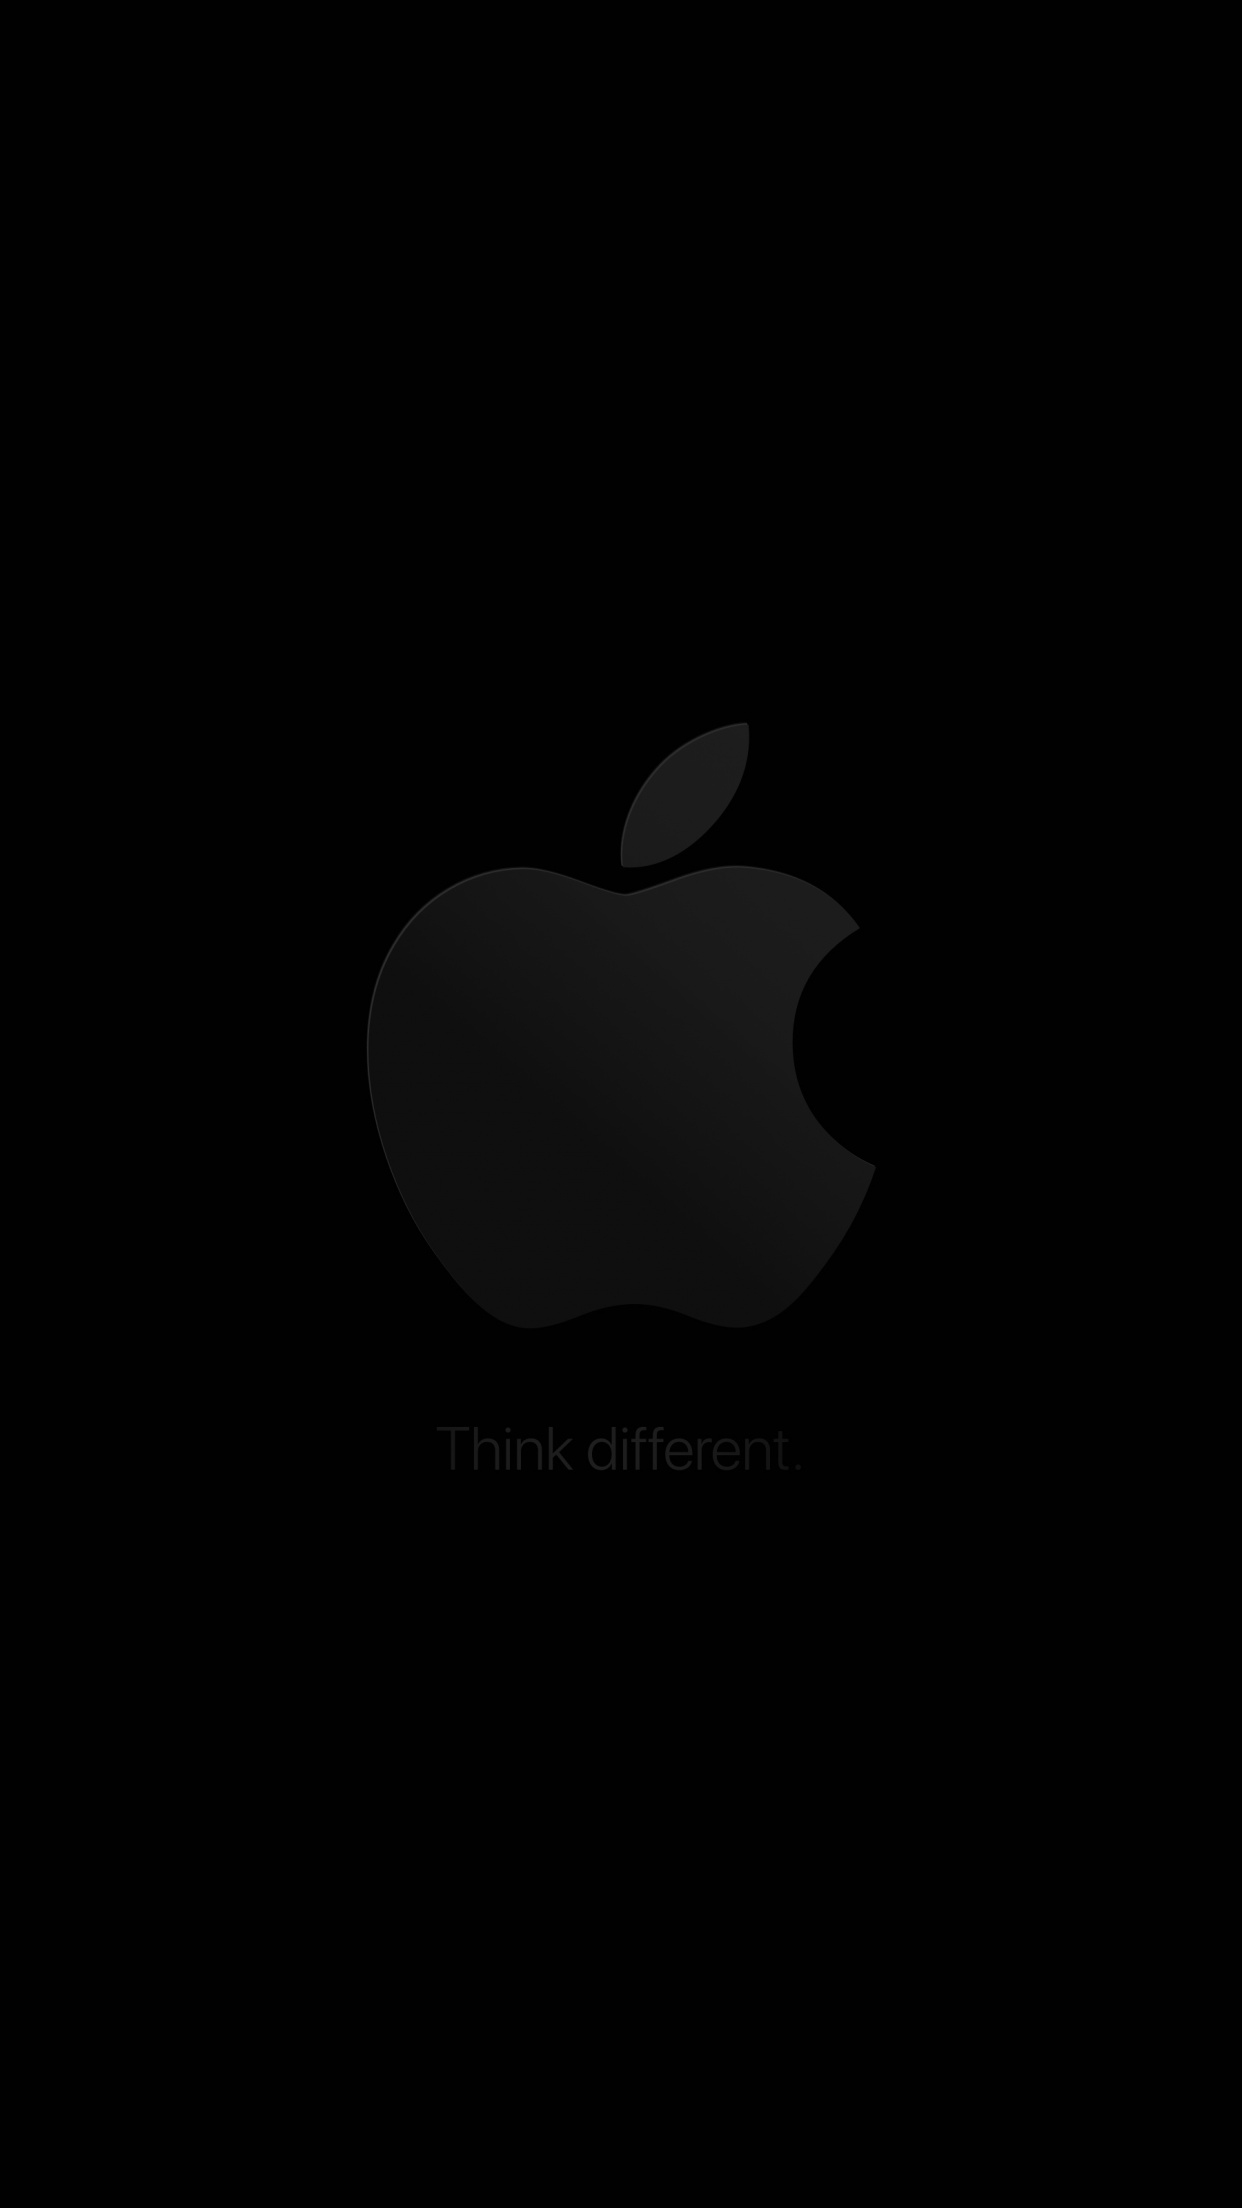 Iphone Apple Logo Black 8K wallpaper download